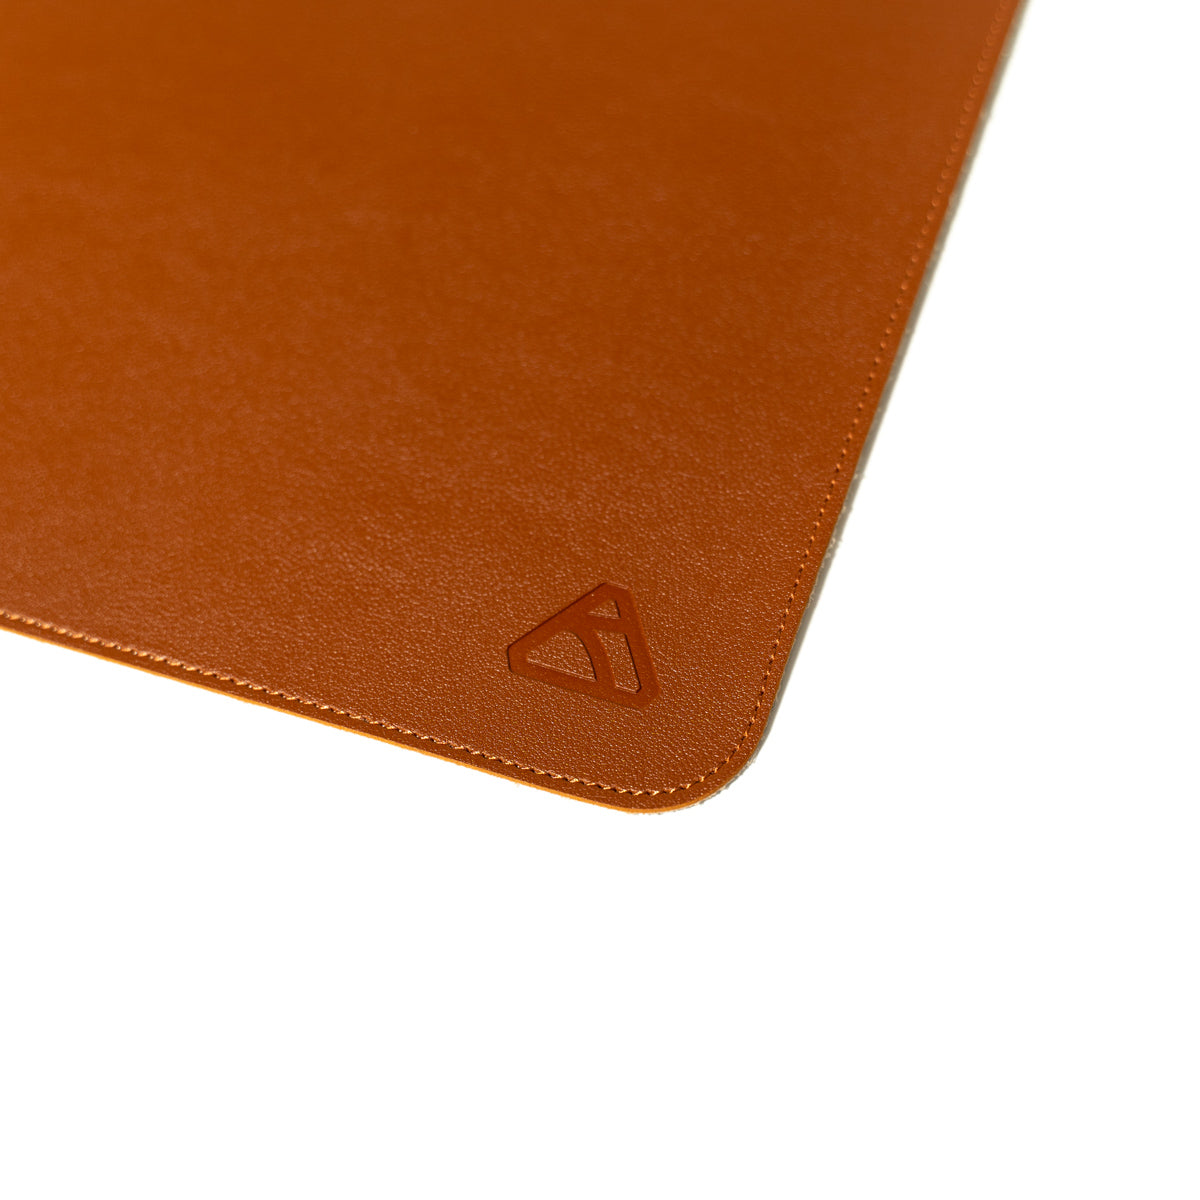 Brown leather desk mat with Ryskape logo